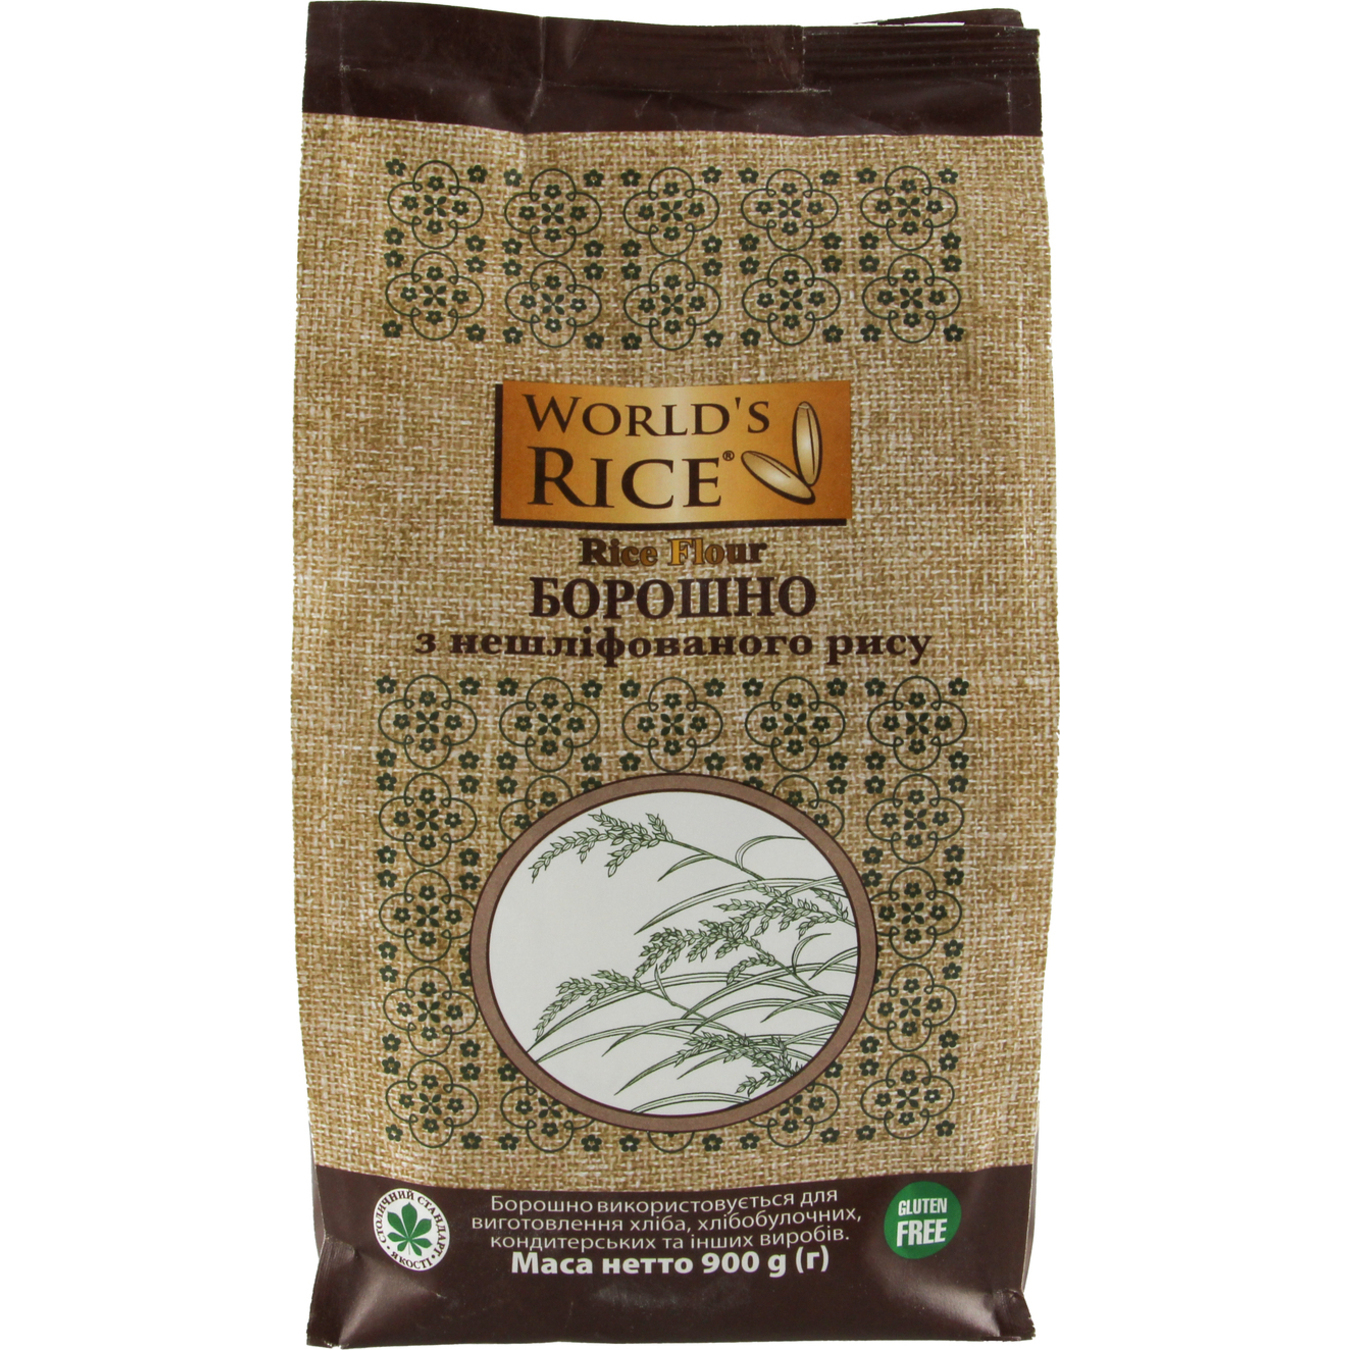 World's Rice Rice Flour 0,9kg